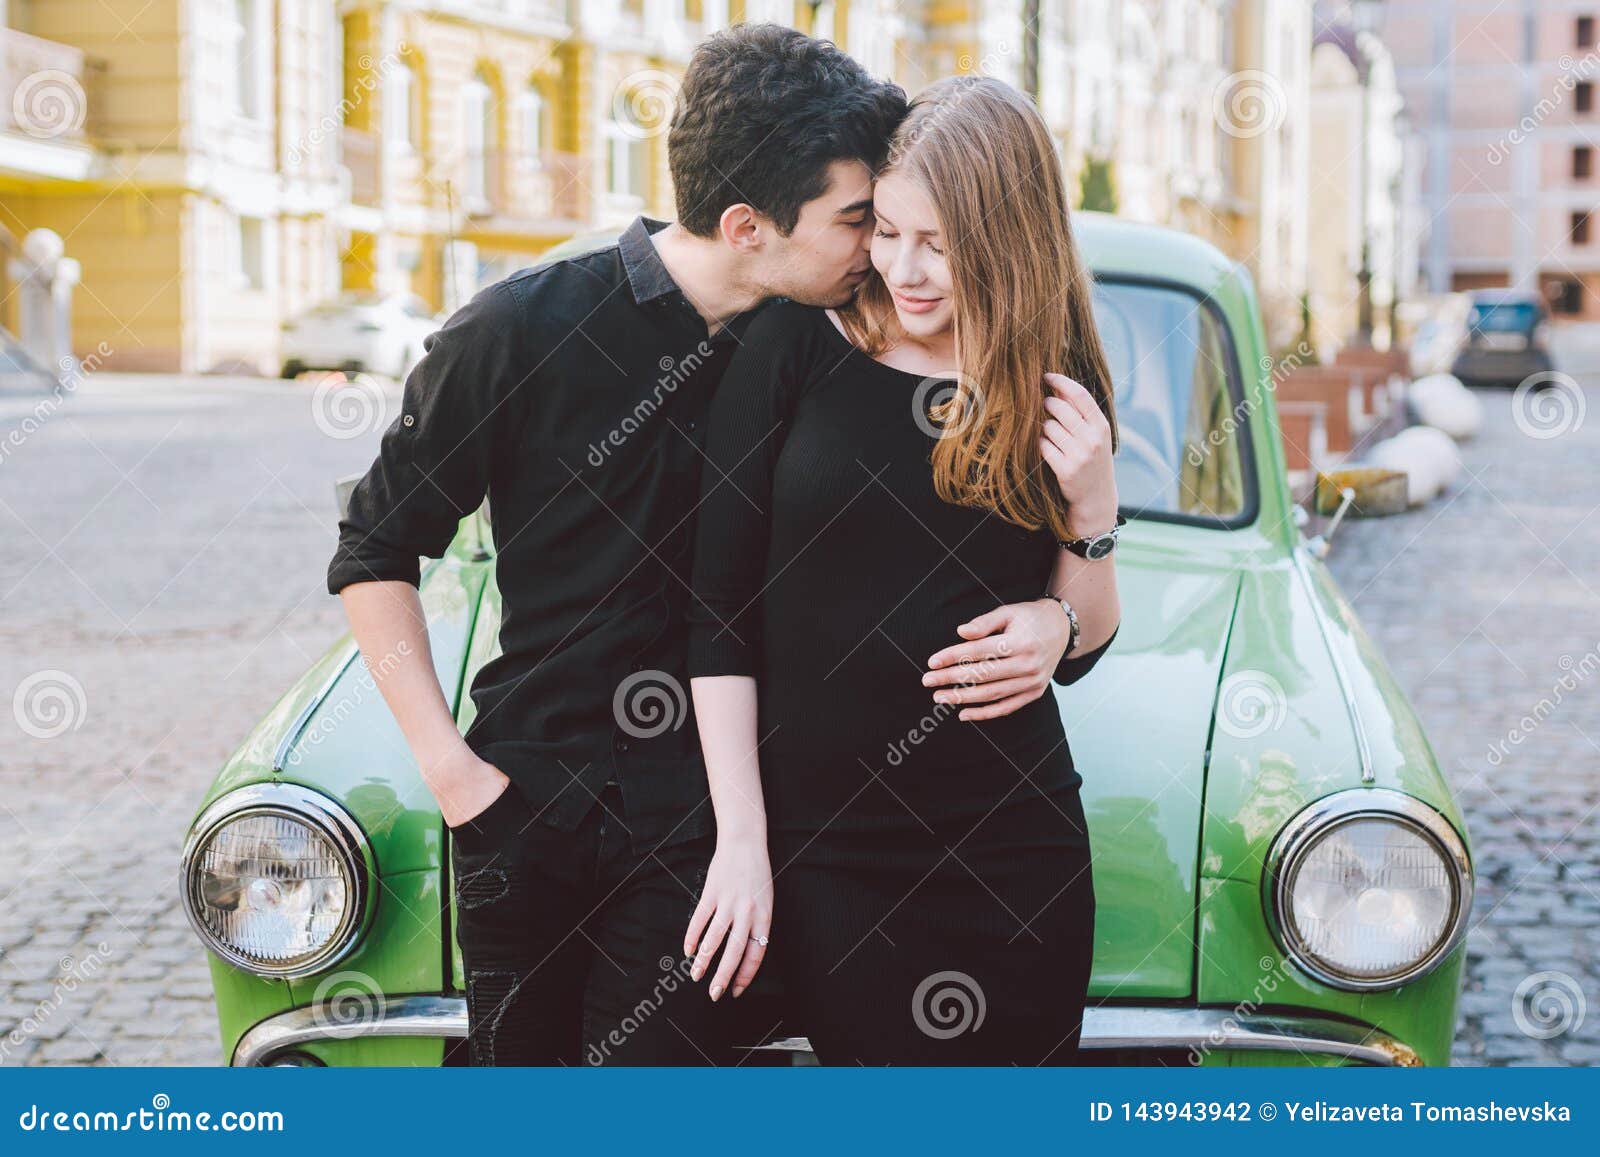 Retro vibes | Classic car photoshoot, Couple photography poses, Wedding couple  poses photography